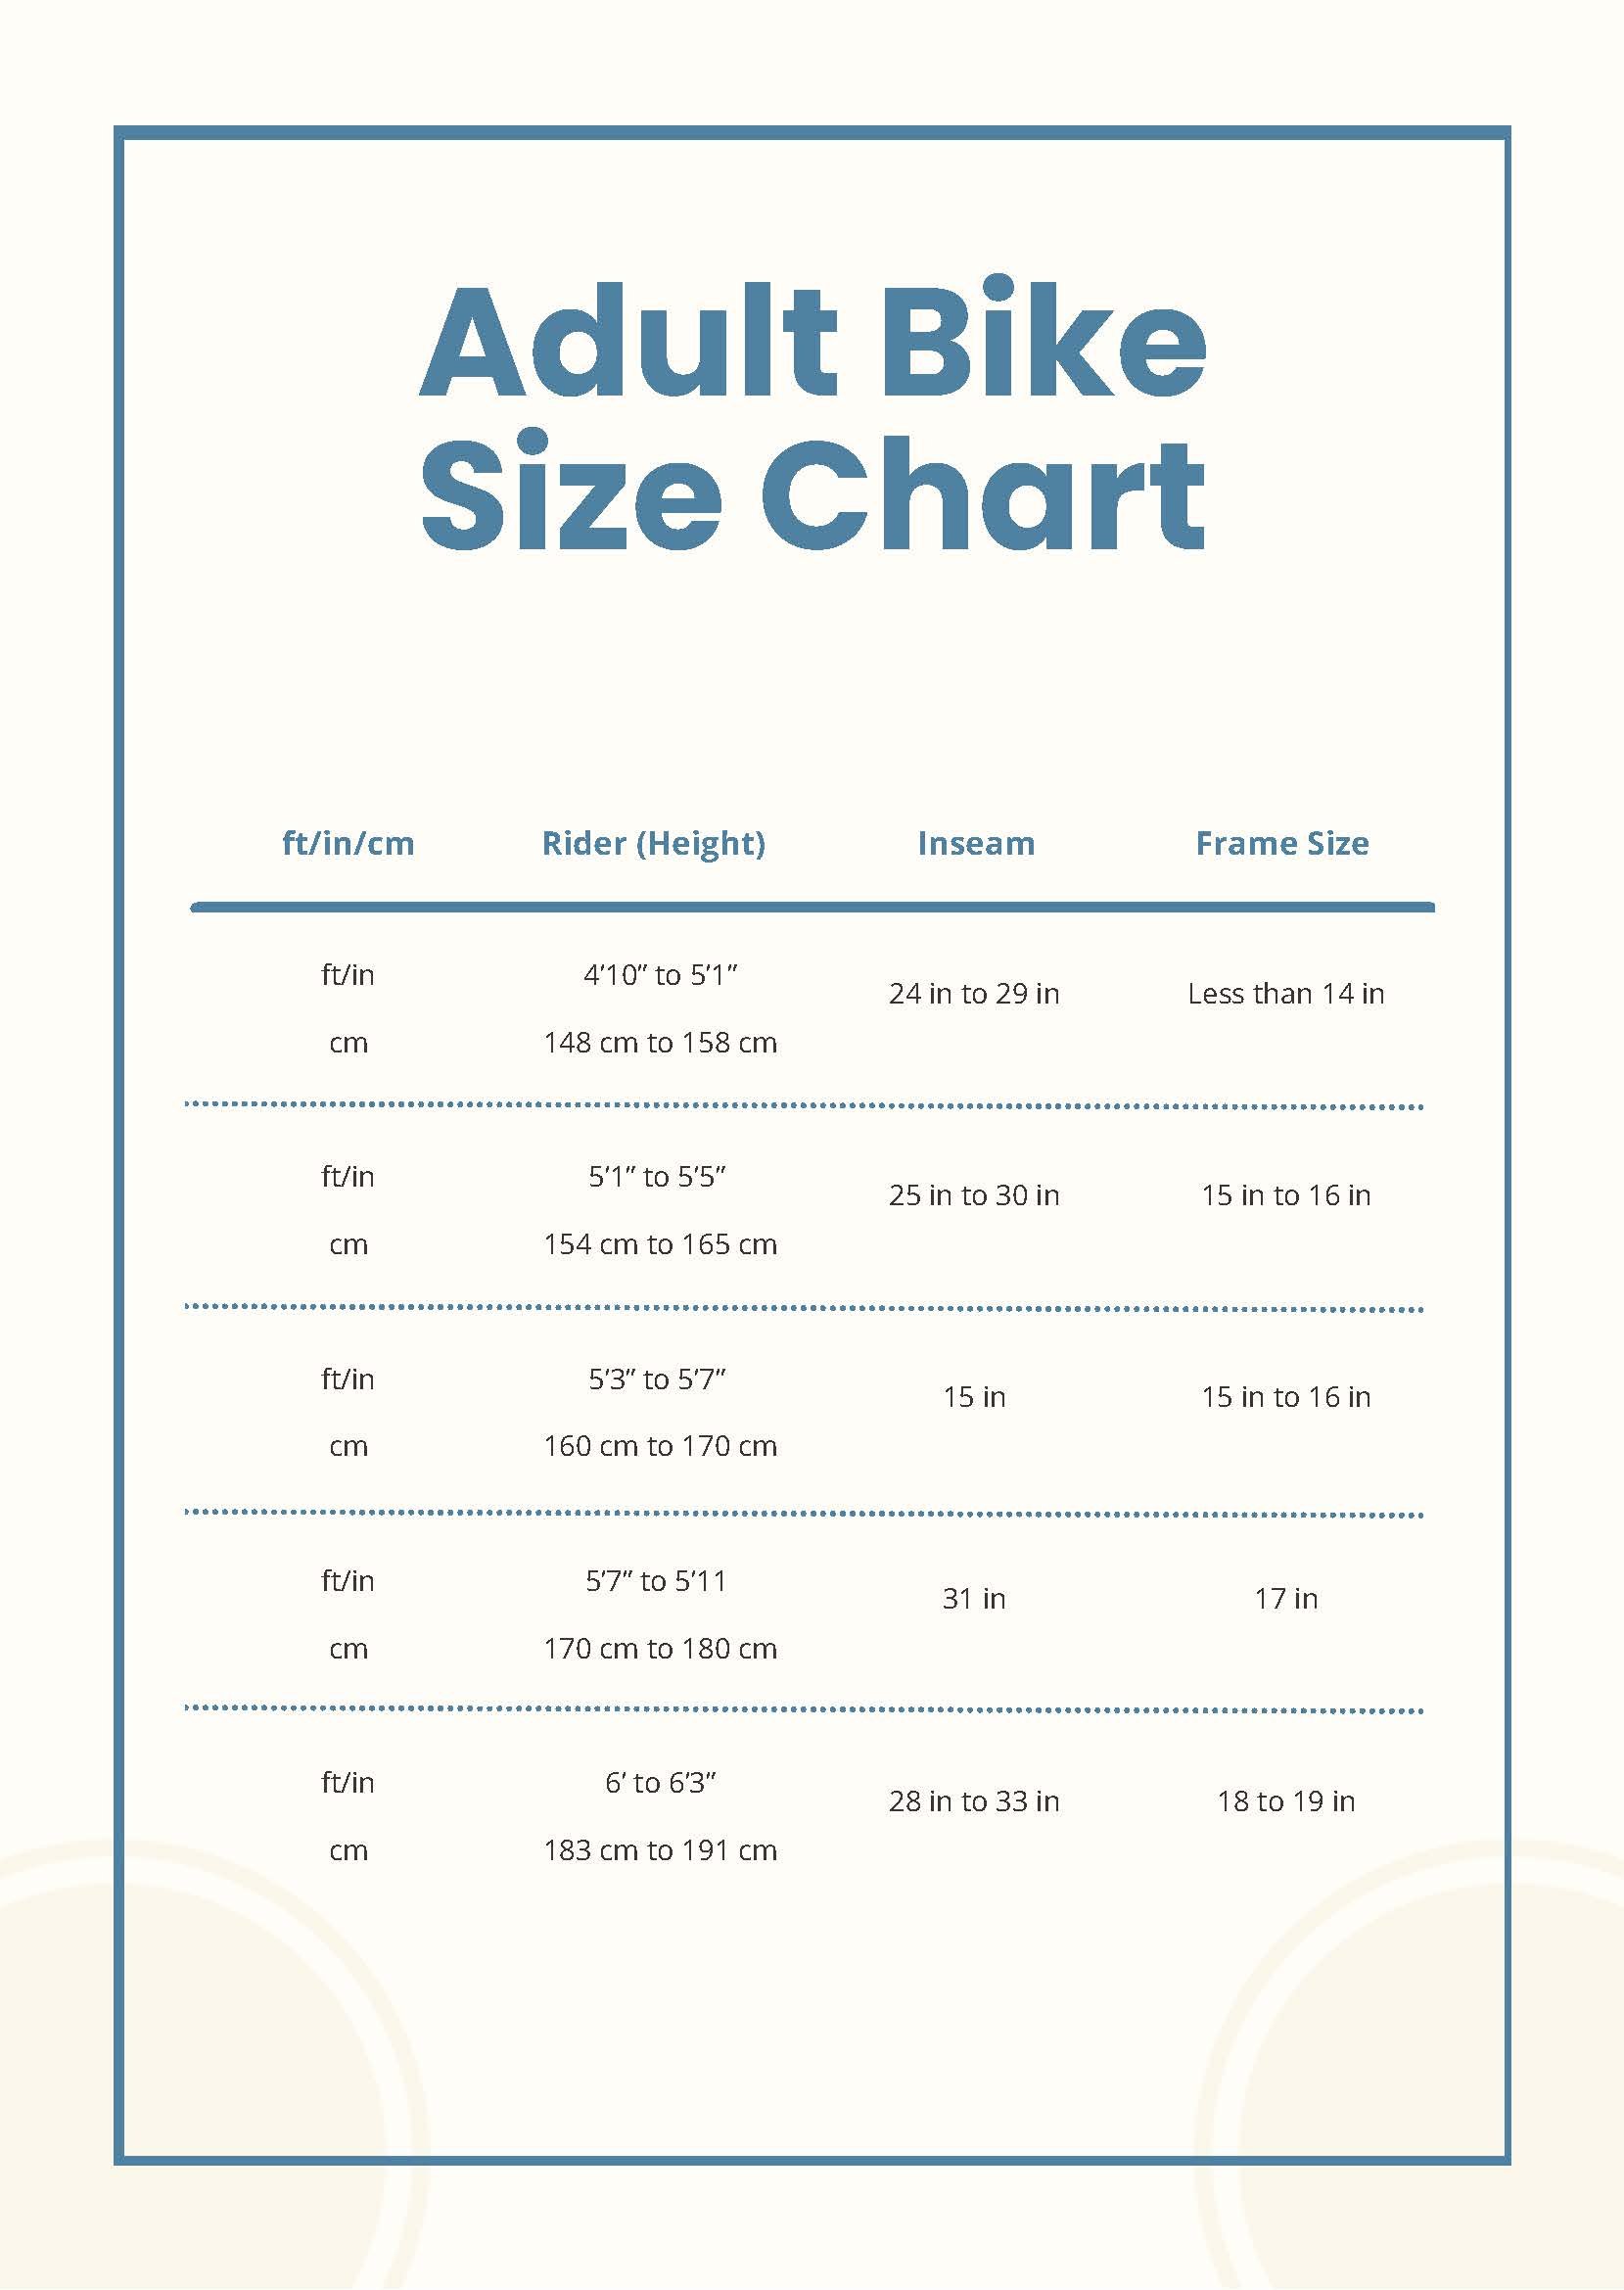 Adult Bike Size Chart in PDF